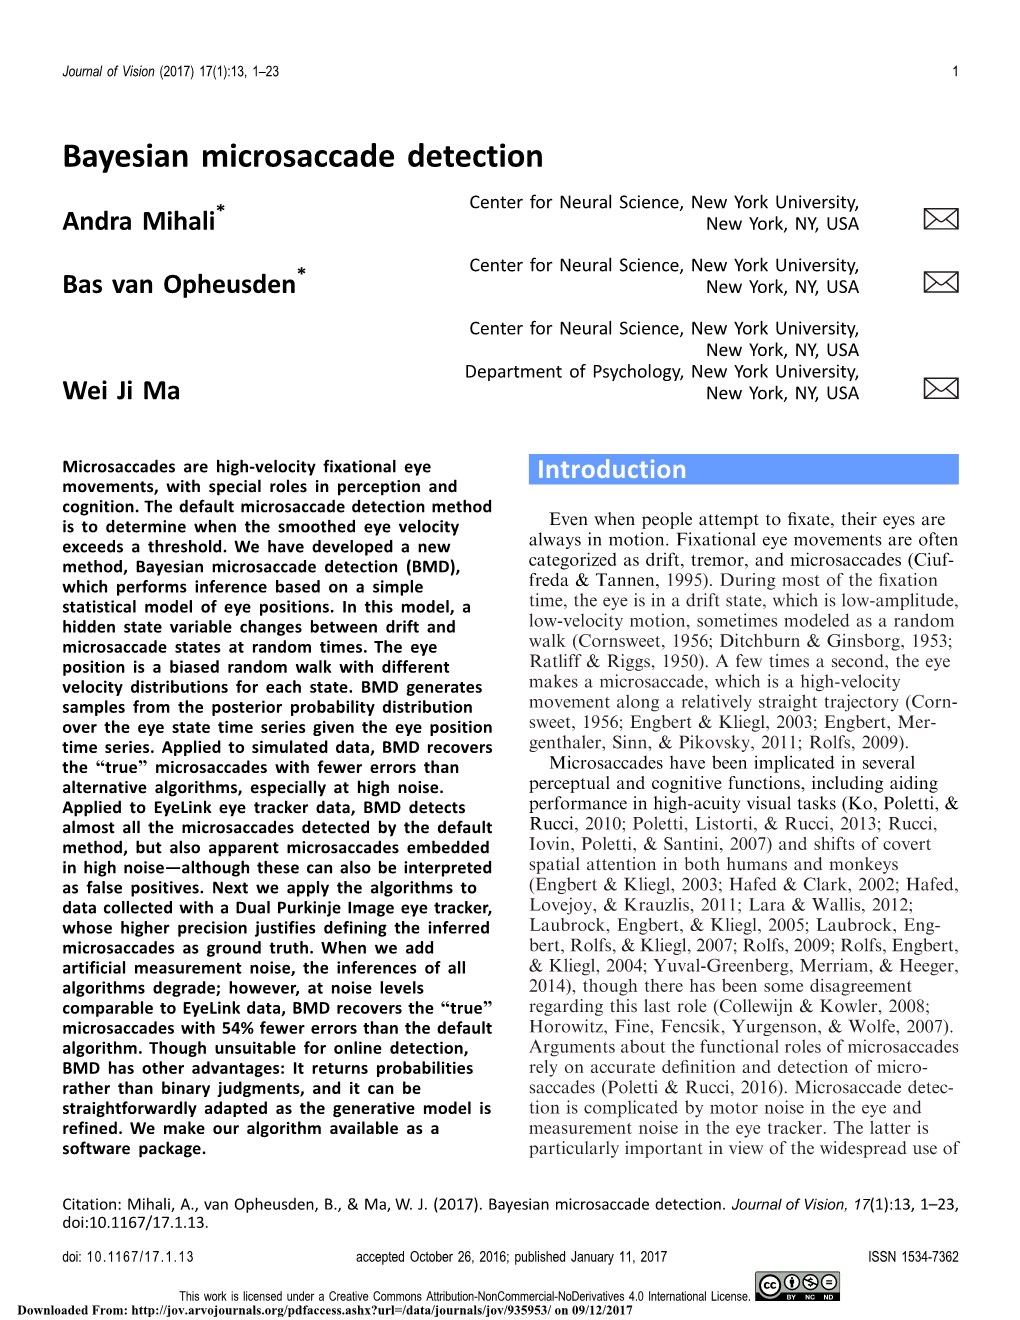 Bayesian Microsaccade Detection